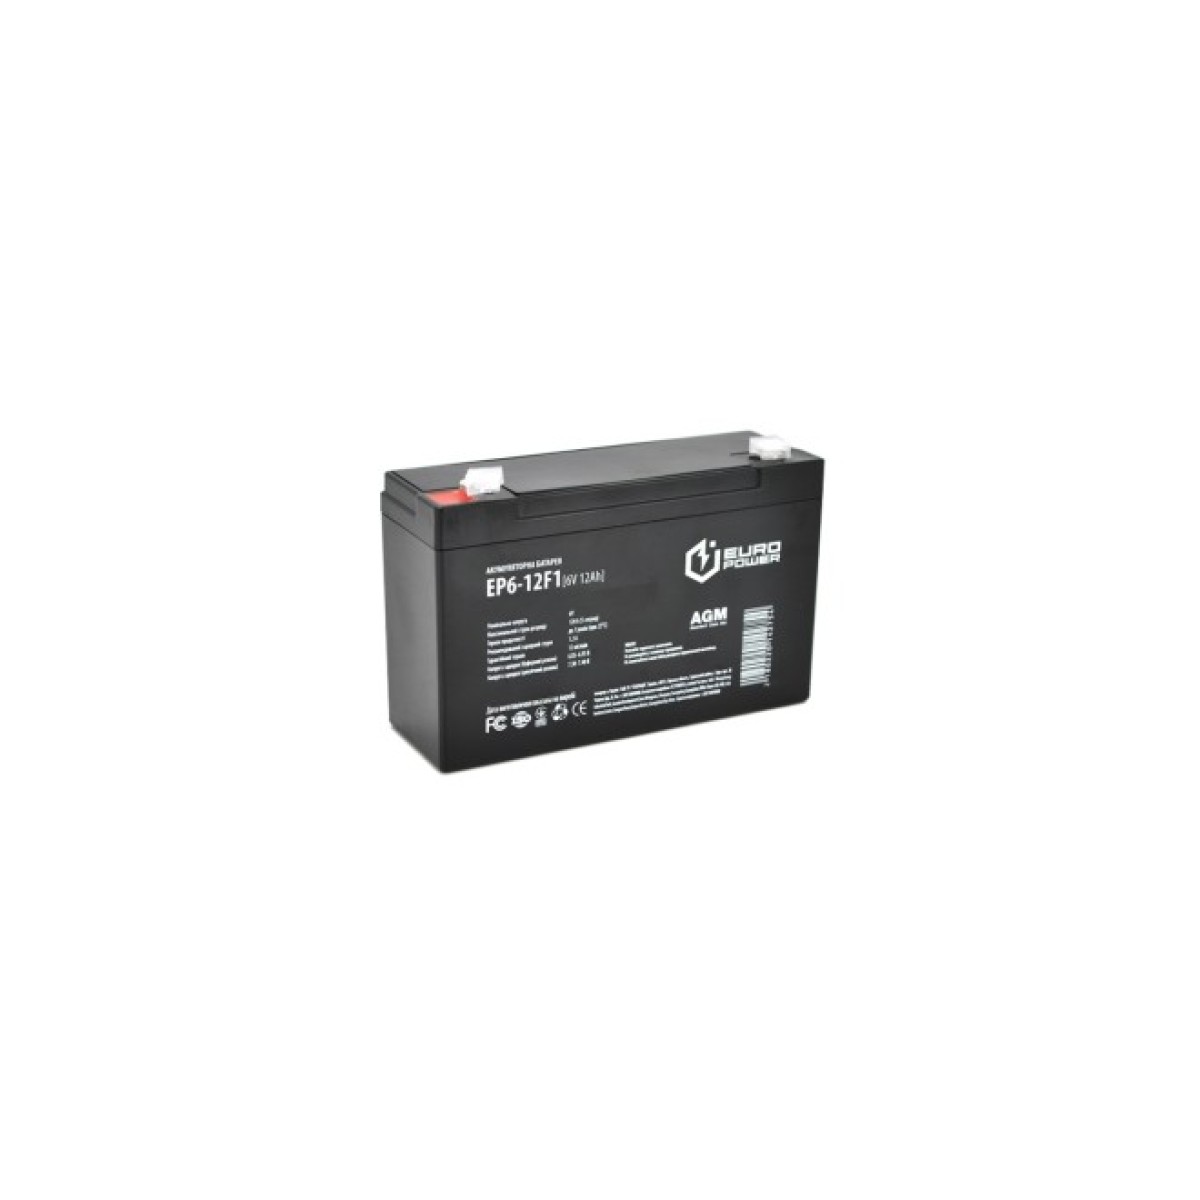 Батарея к ИБП Europower 6В 12Ач (EP6-12F1) 256_256.jpg